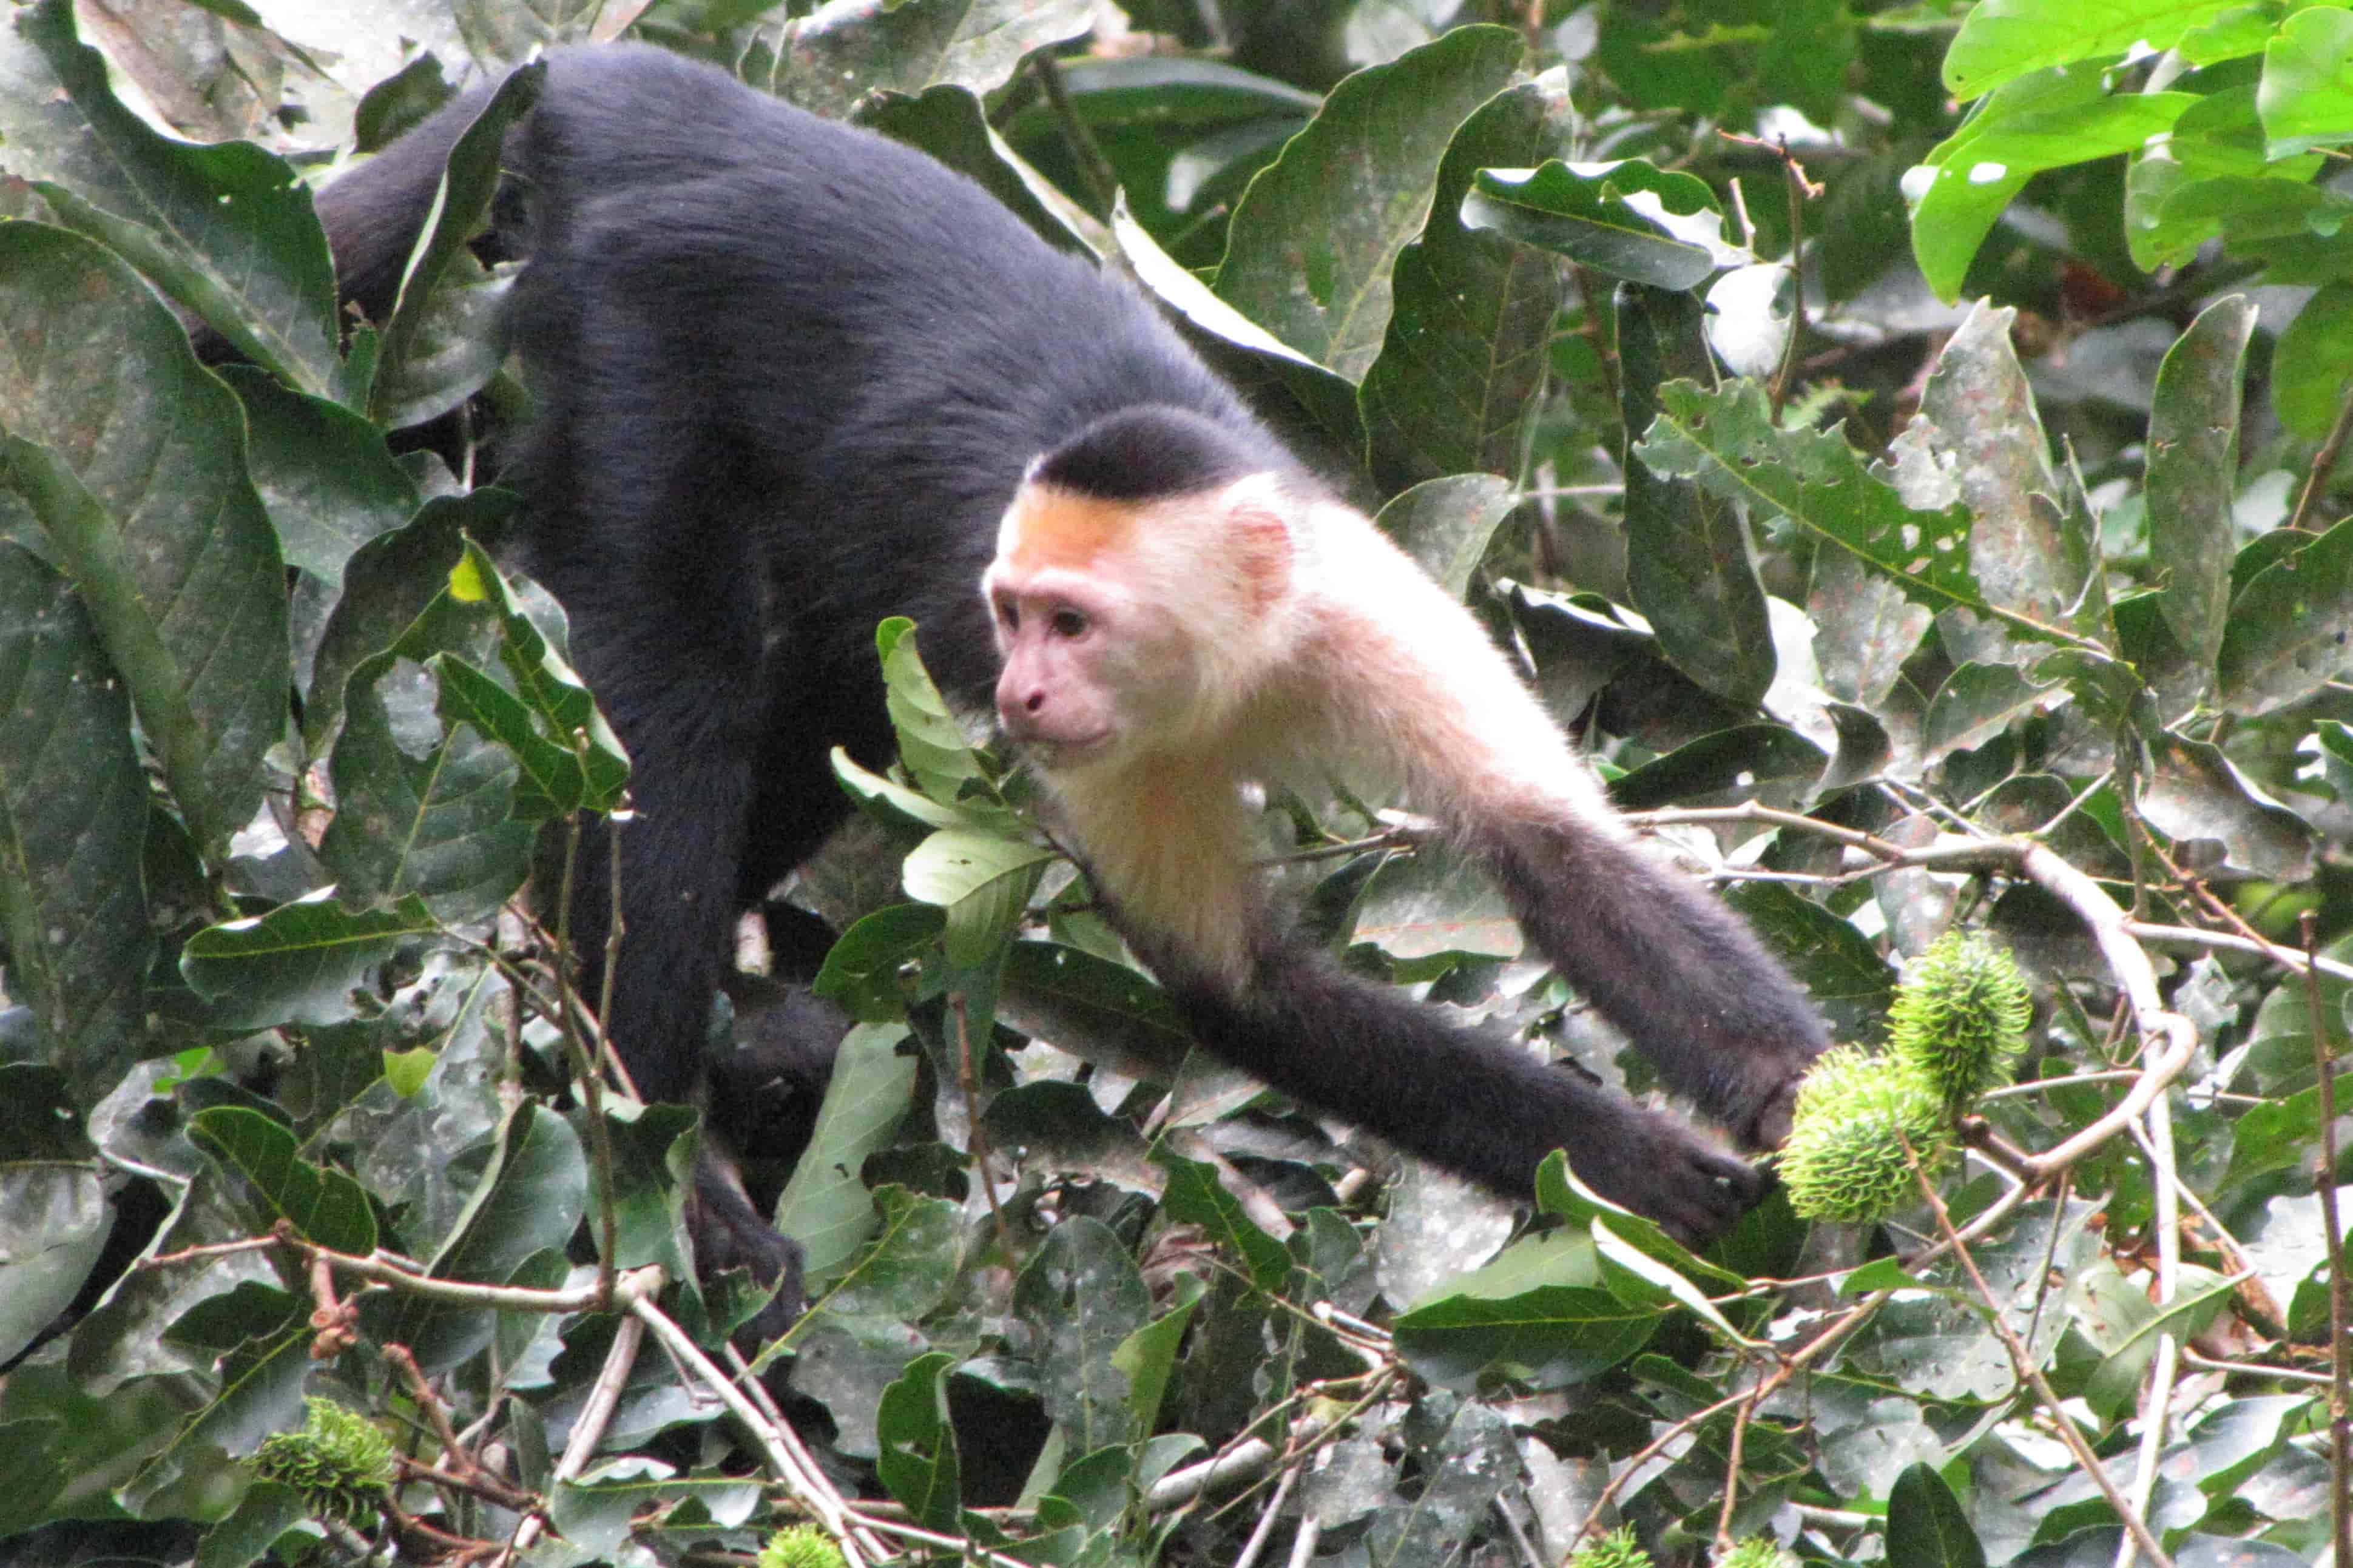 This Capuchin monkey is an example of the species that SLU anthropologist Katherine C. MacKinnon, Ph.D. studies.